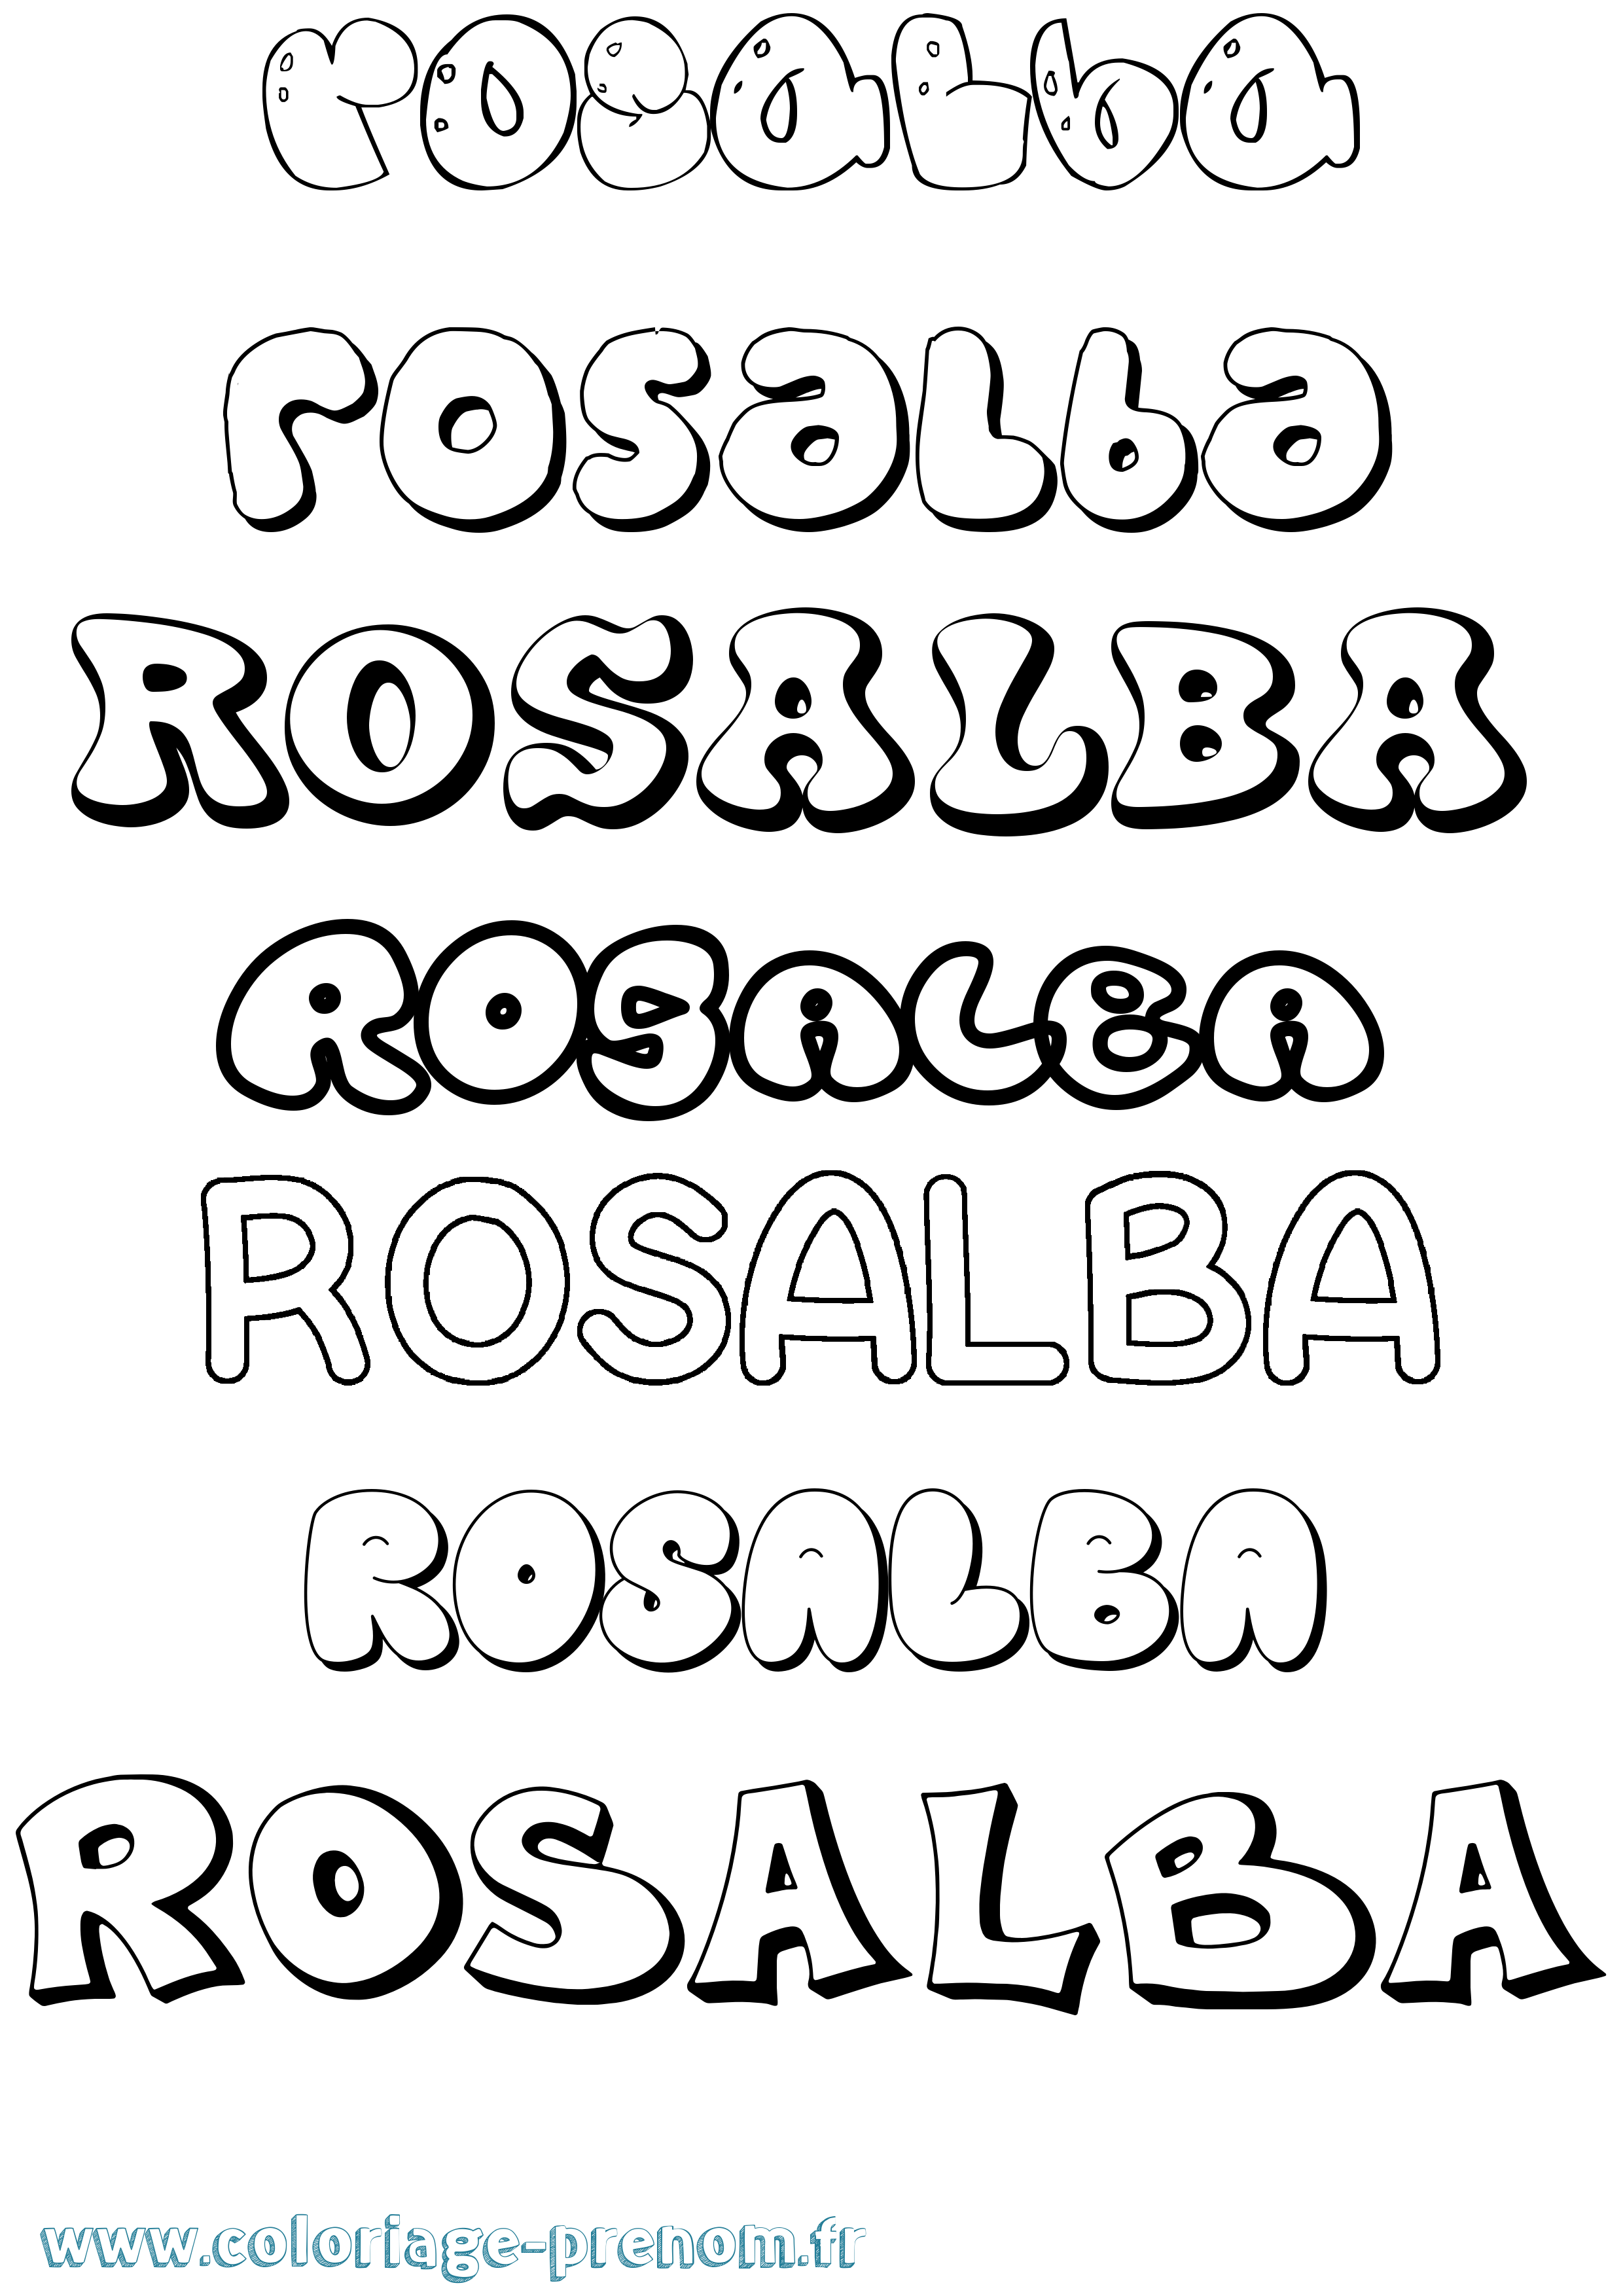 Coloriage prénom Rosalba Bubble